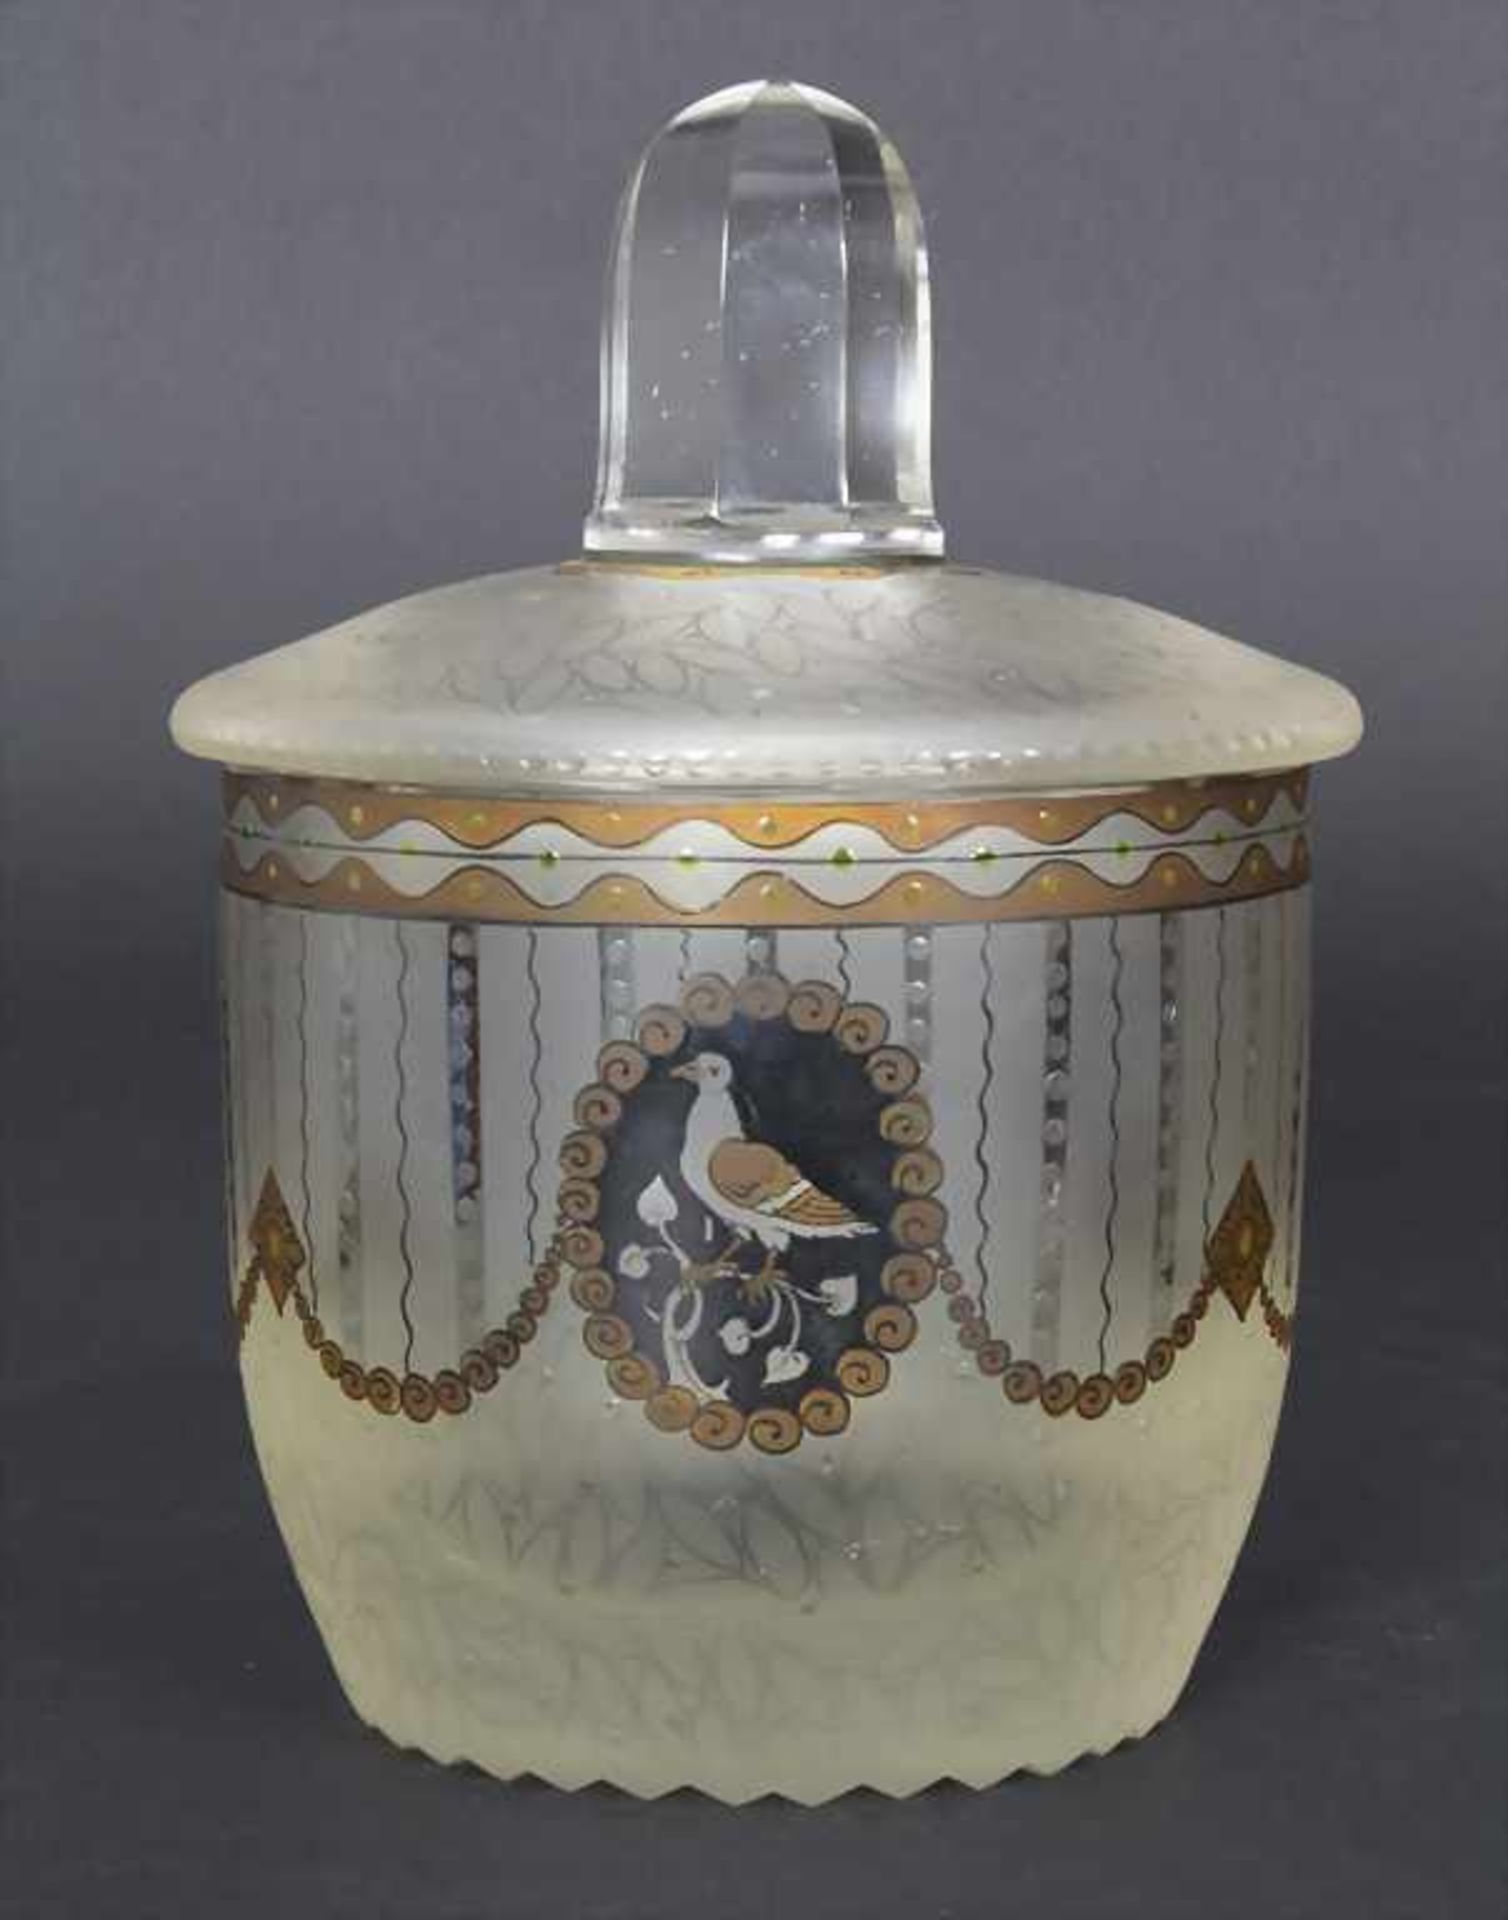 Jugendstil Deckelgefäß mit Transparentemaildekor / An Art Nouveau covered bowl with transparent - Bild 2 aus 5